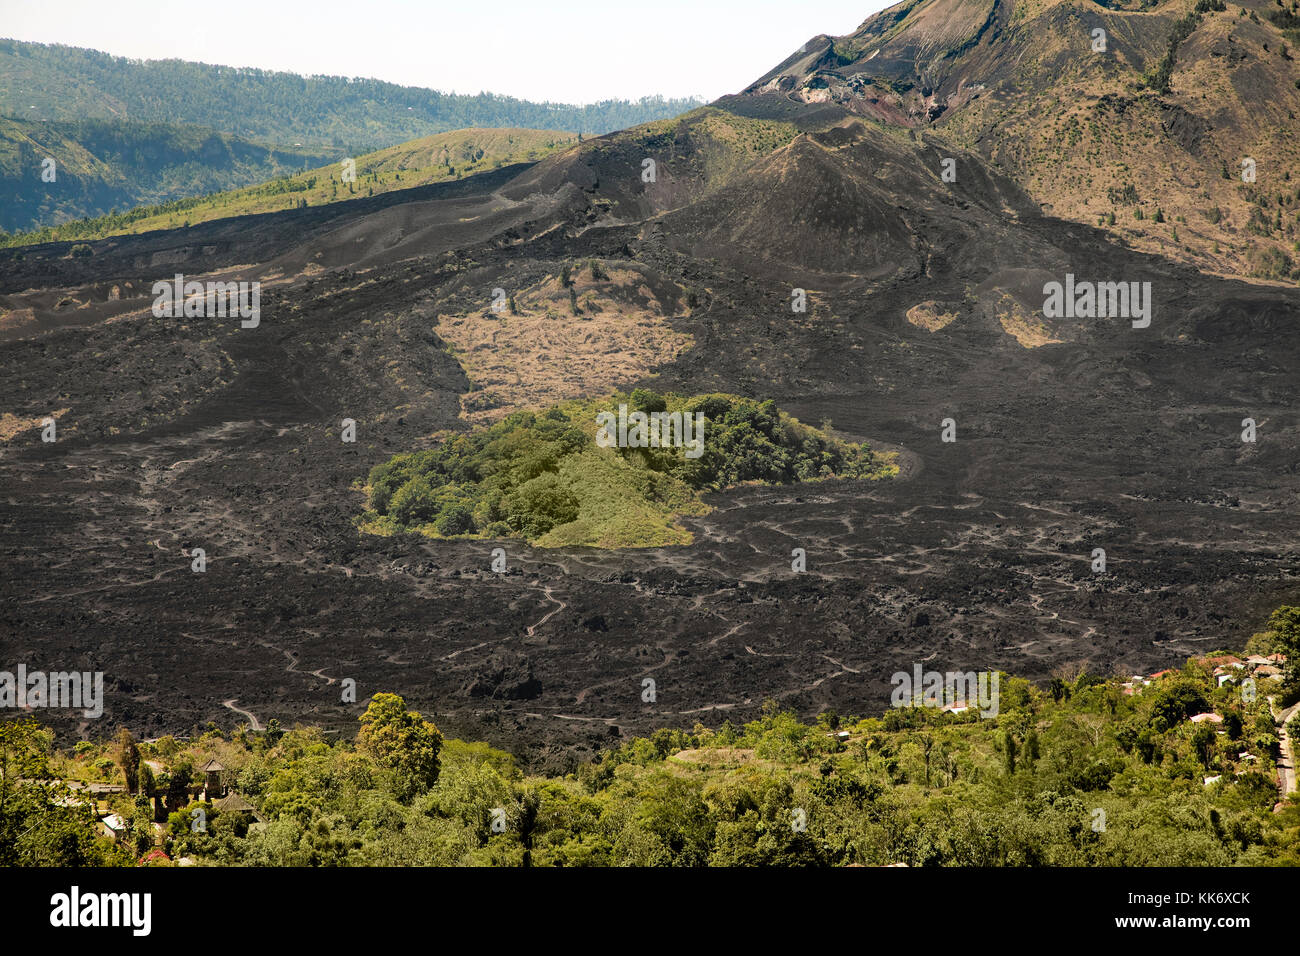 Burnt, charred vegetation left following volcano eruption, Bali, Indonesia Stock Photo